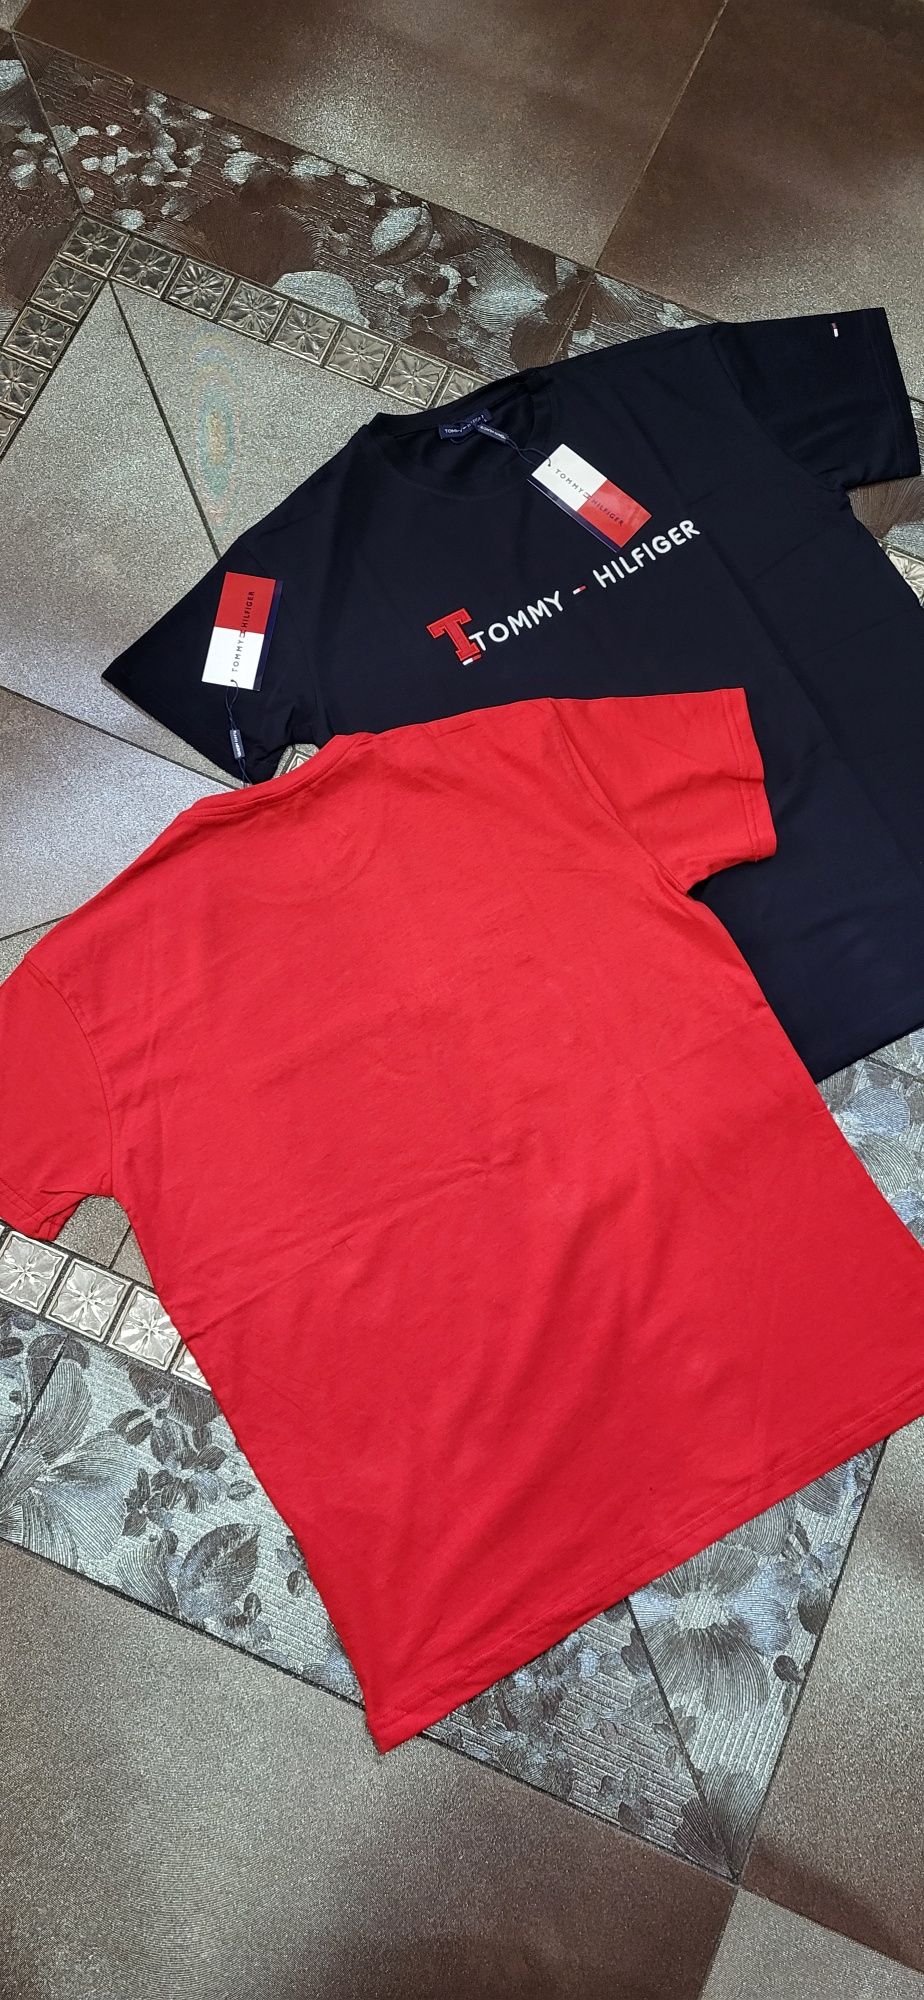 TH Tommy 2 koszulki męskie t-shirt czerwona granat L premium